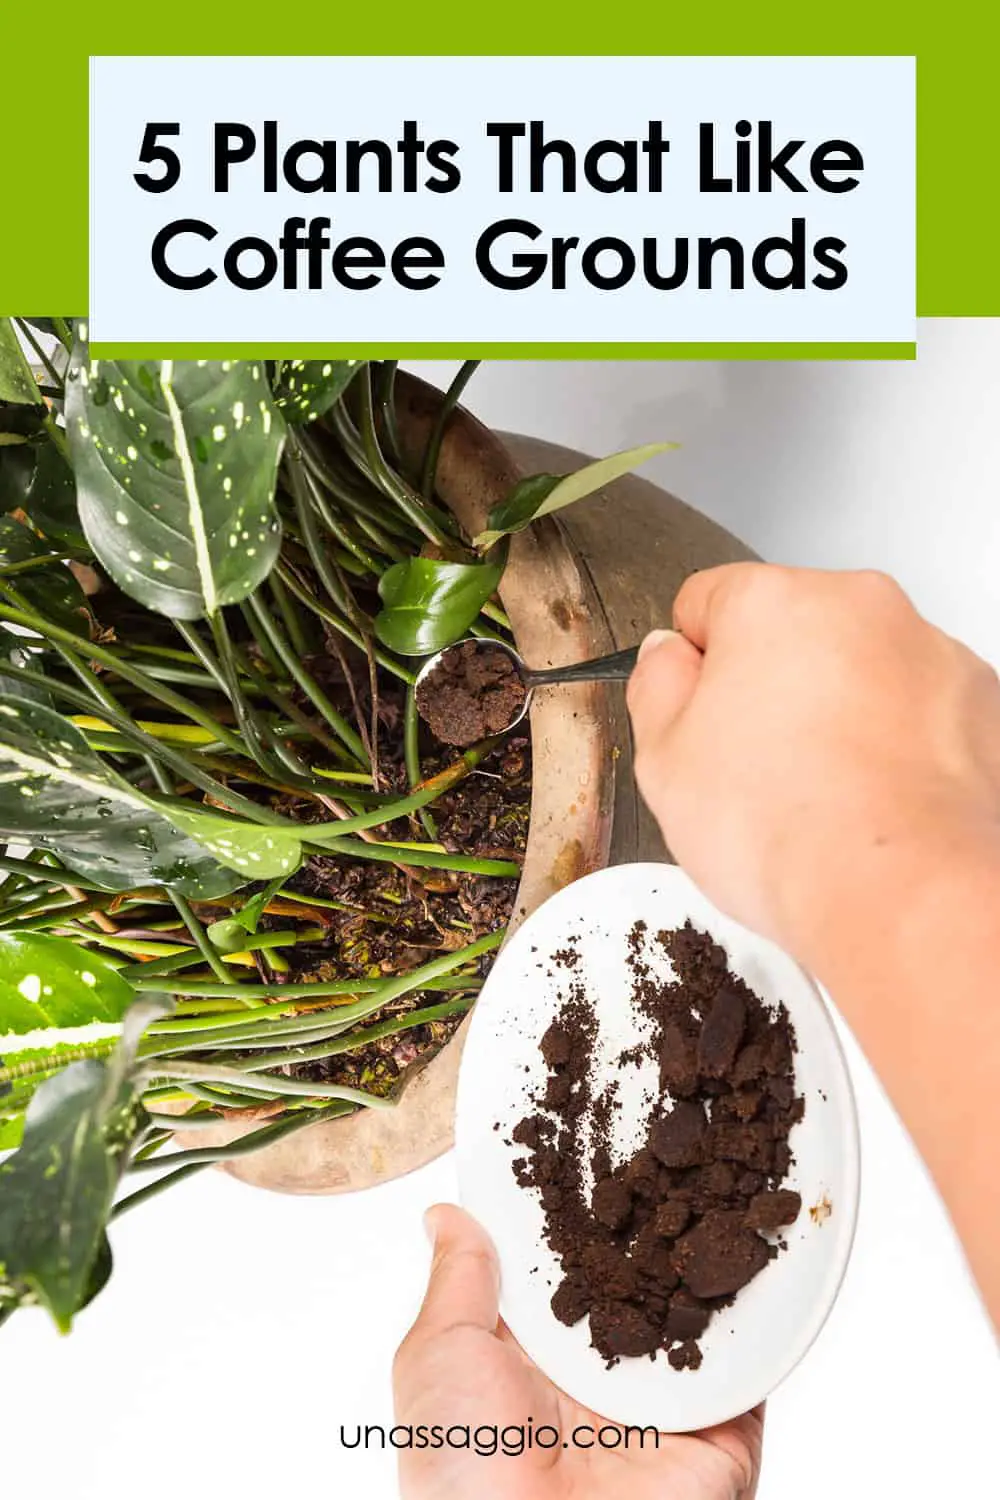 5 Plants That Like Coffee Grounds